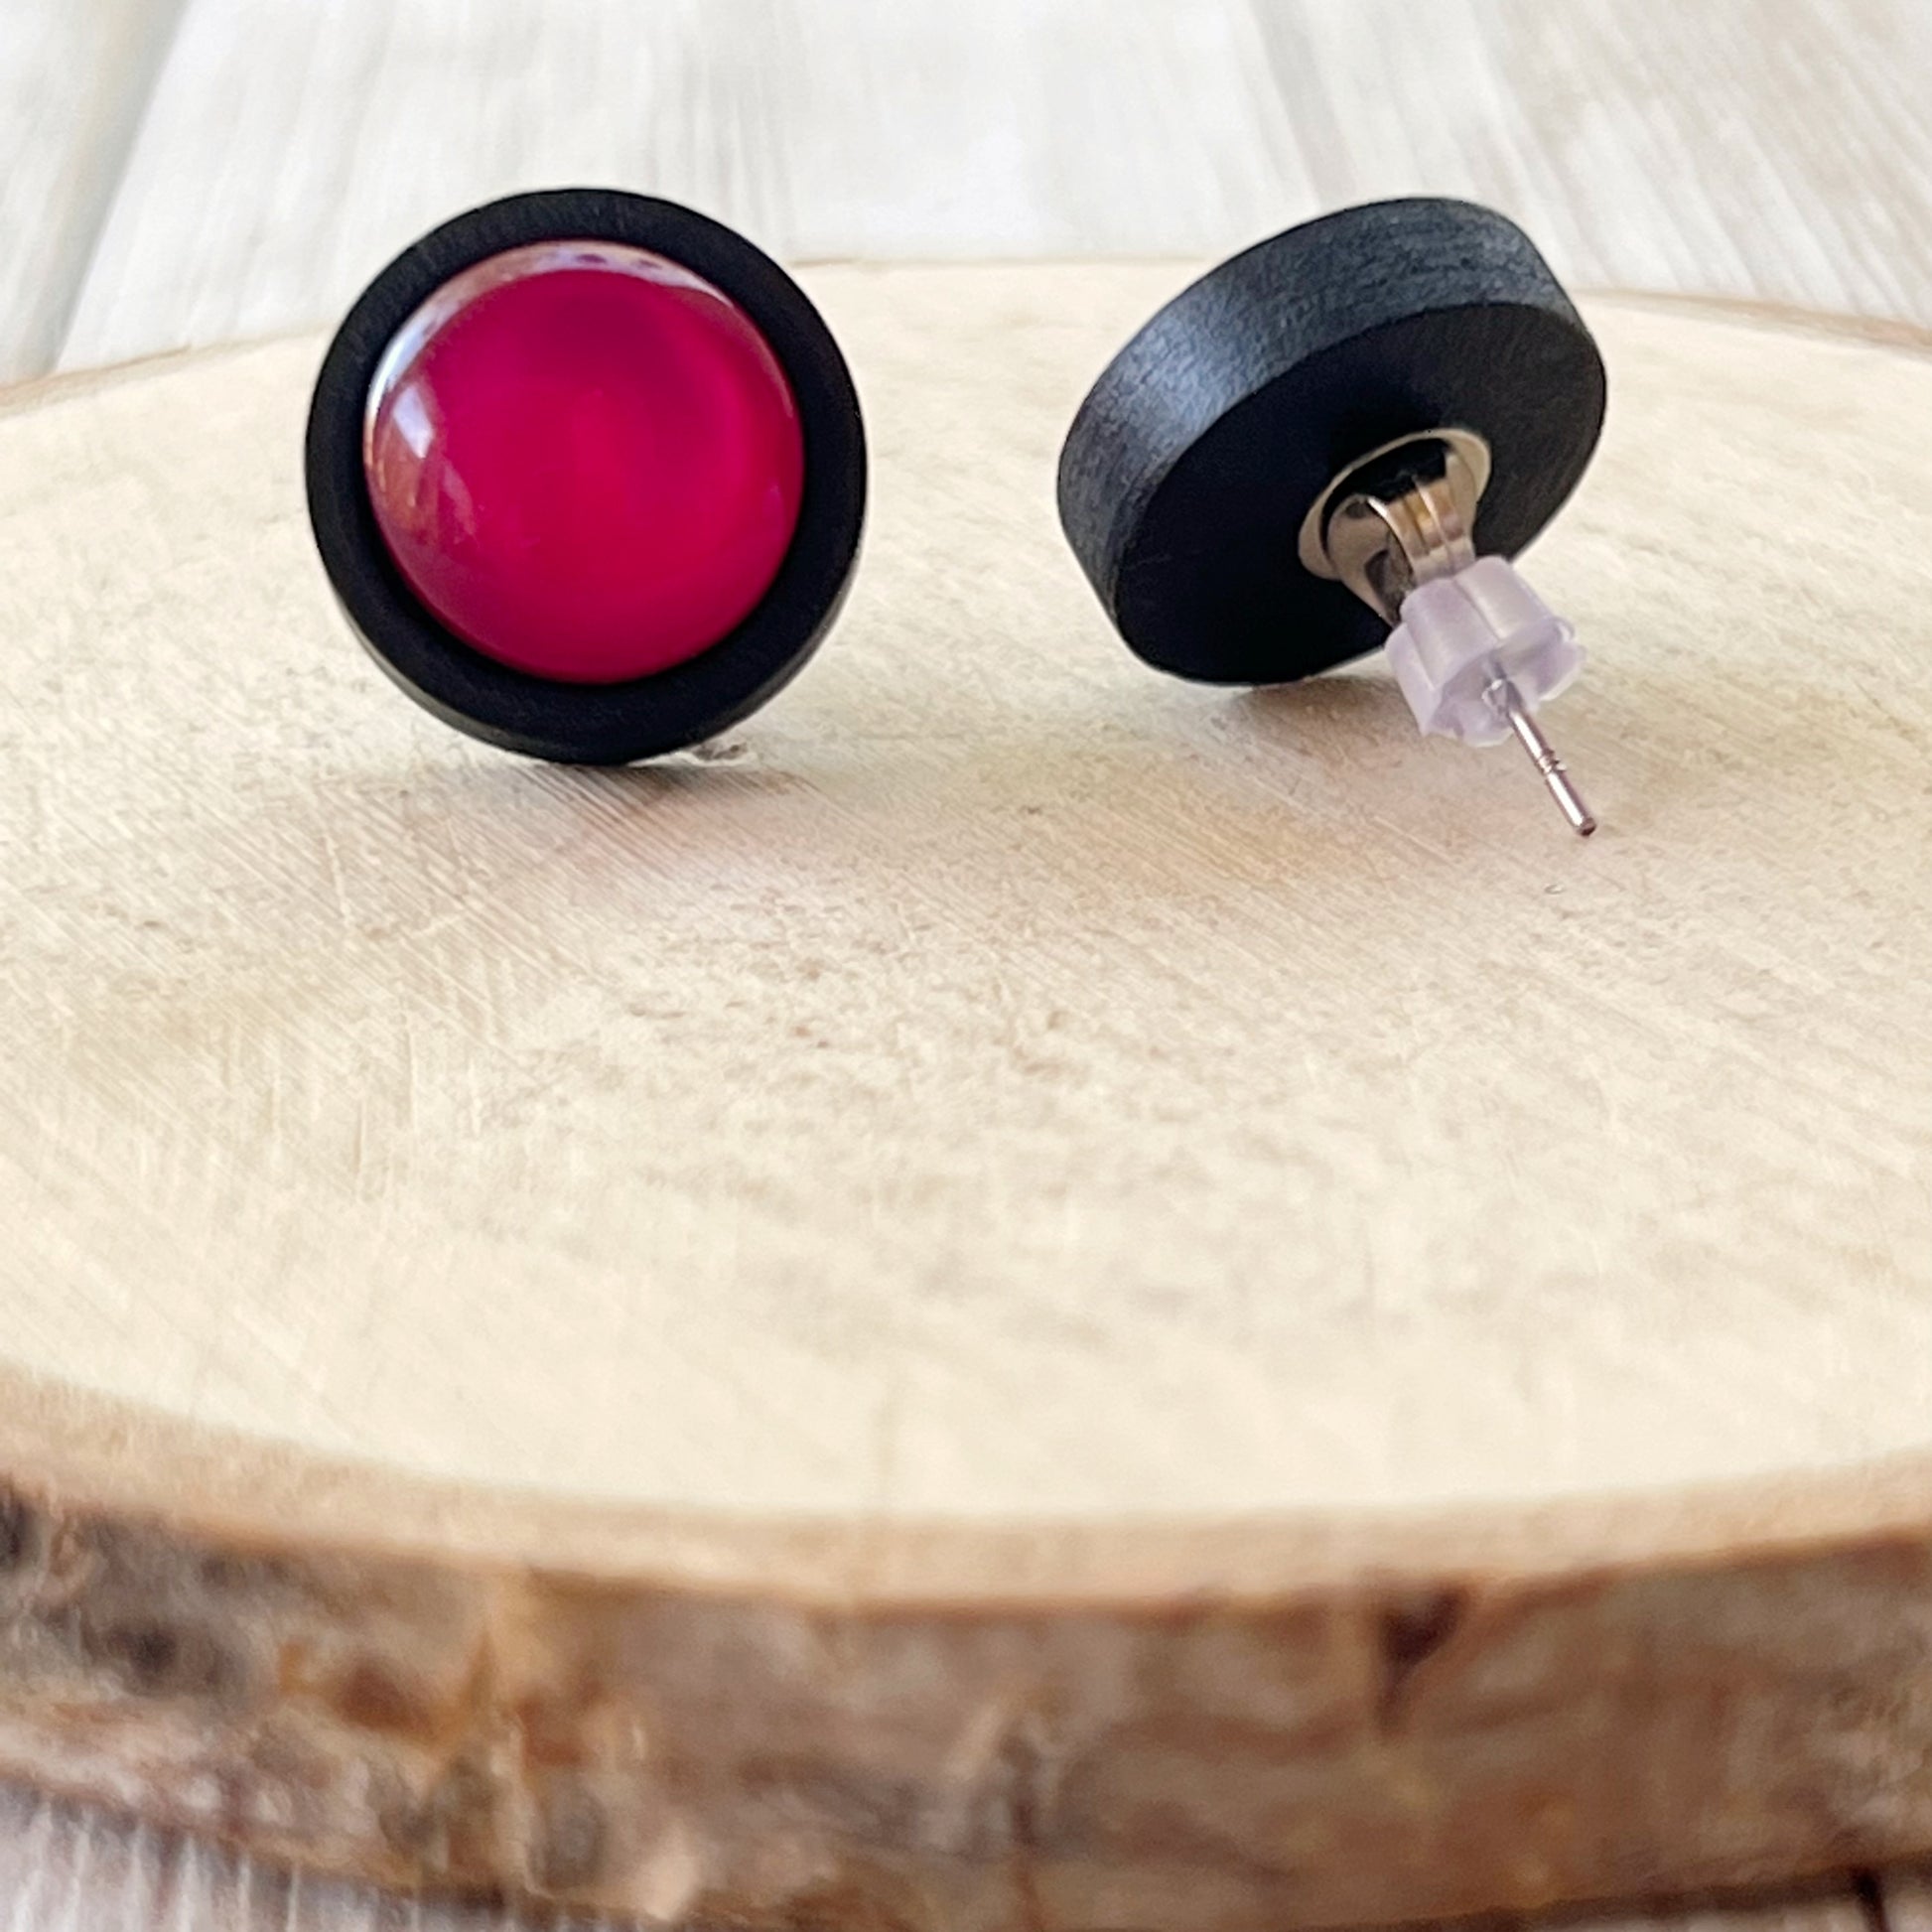 Pink Resin Black Wood Unisex Stud Earrings - Unique & Stylish Accessories